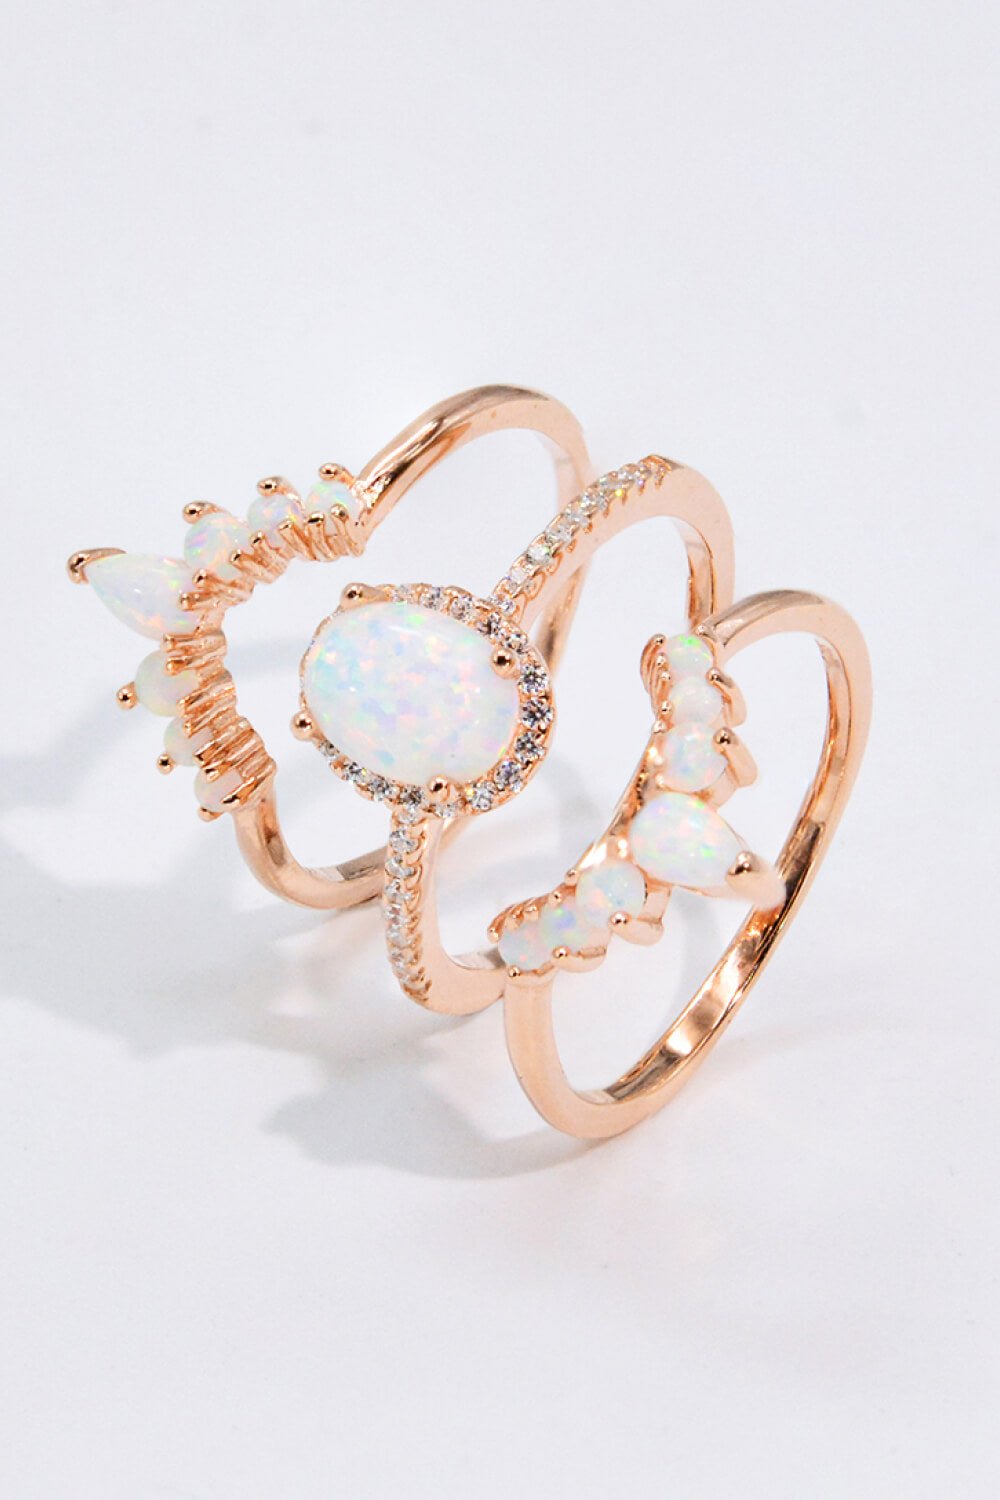 Opal and Zircon Three-Piece Ring Set - Tangerine Goddess